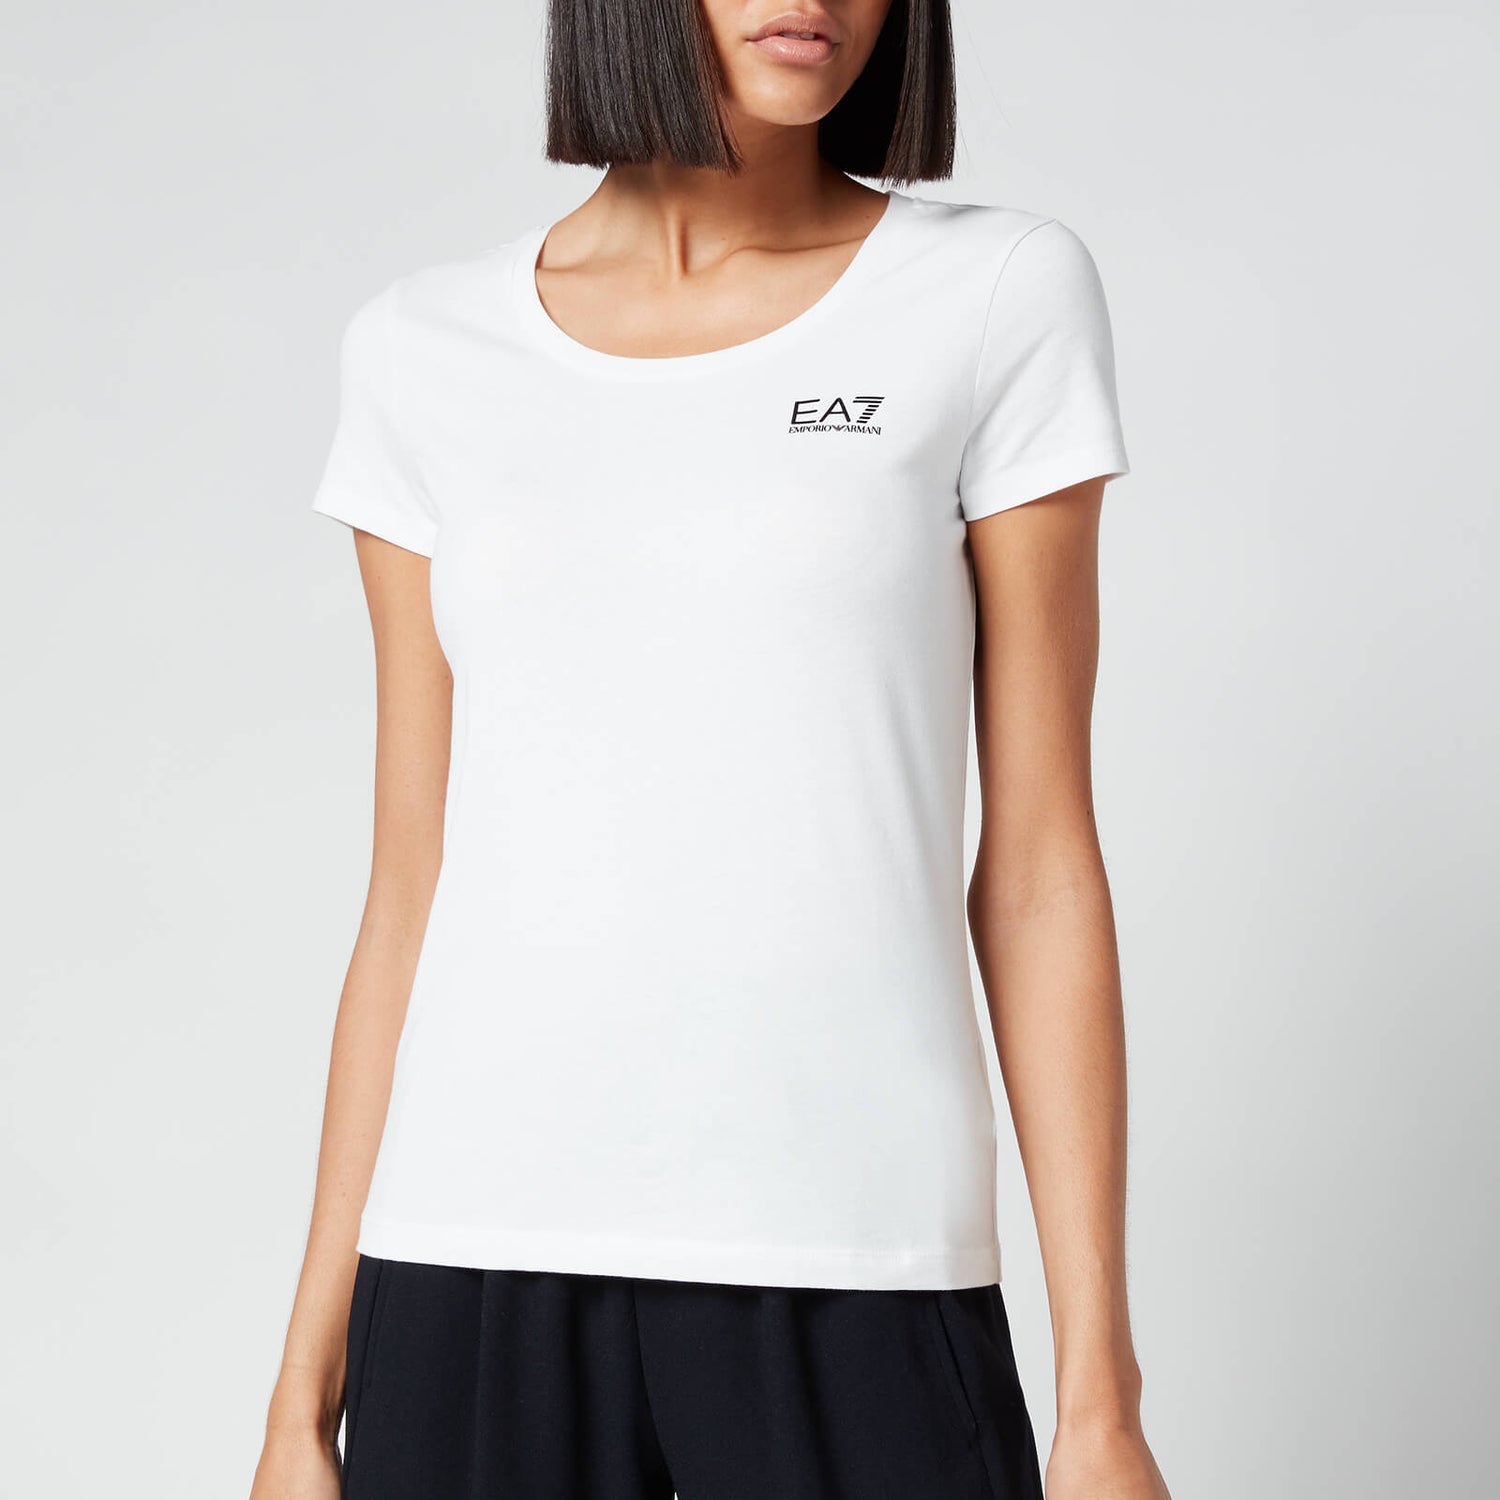 Emporio Armani EA7 Women's Train Shiny Small Logo T-Shirt - White/Black